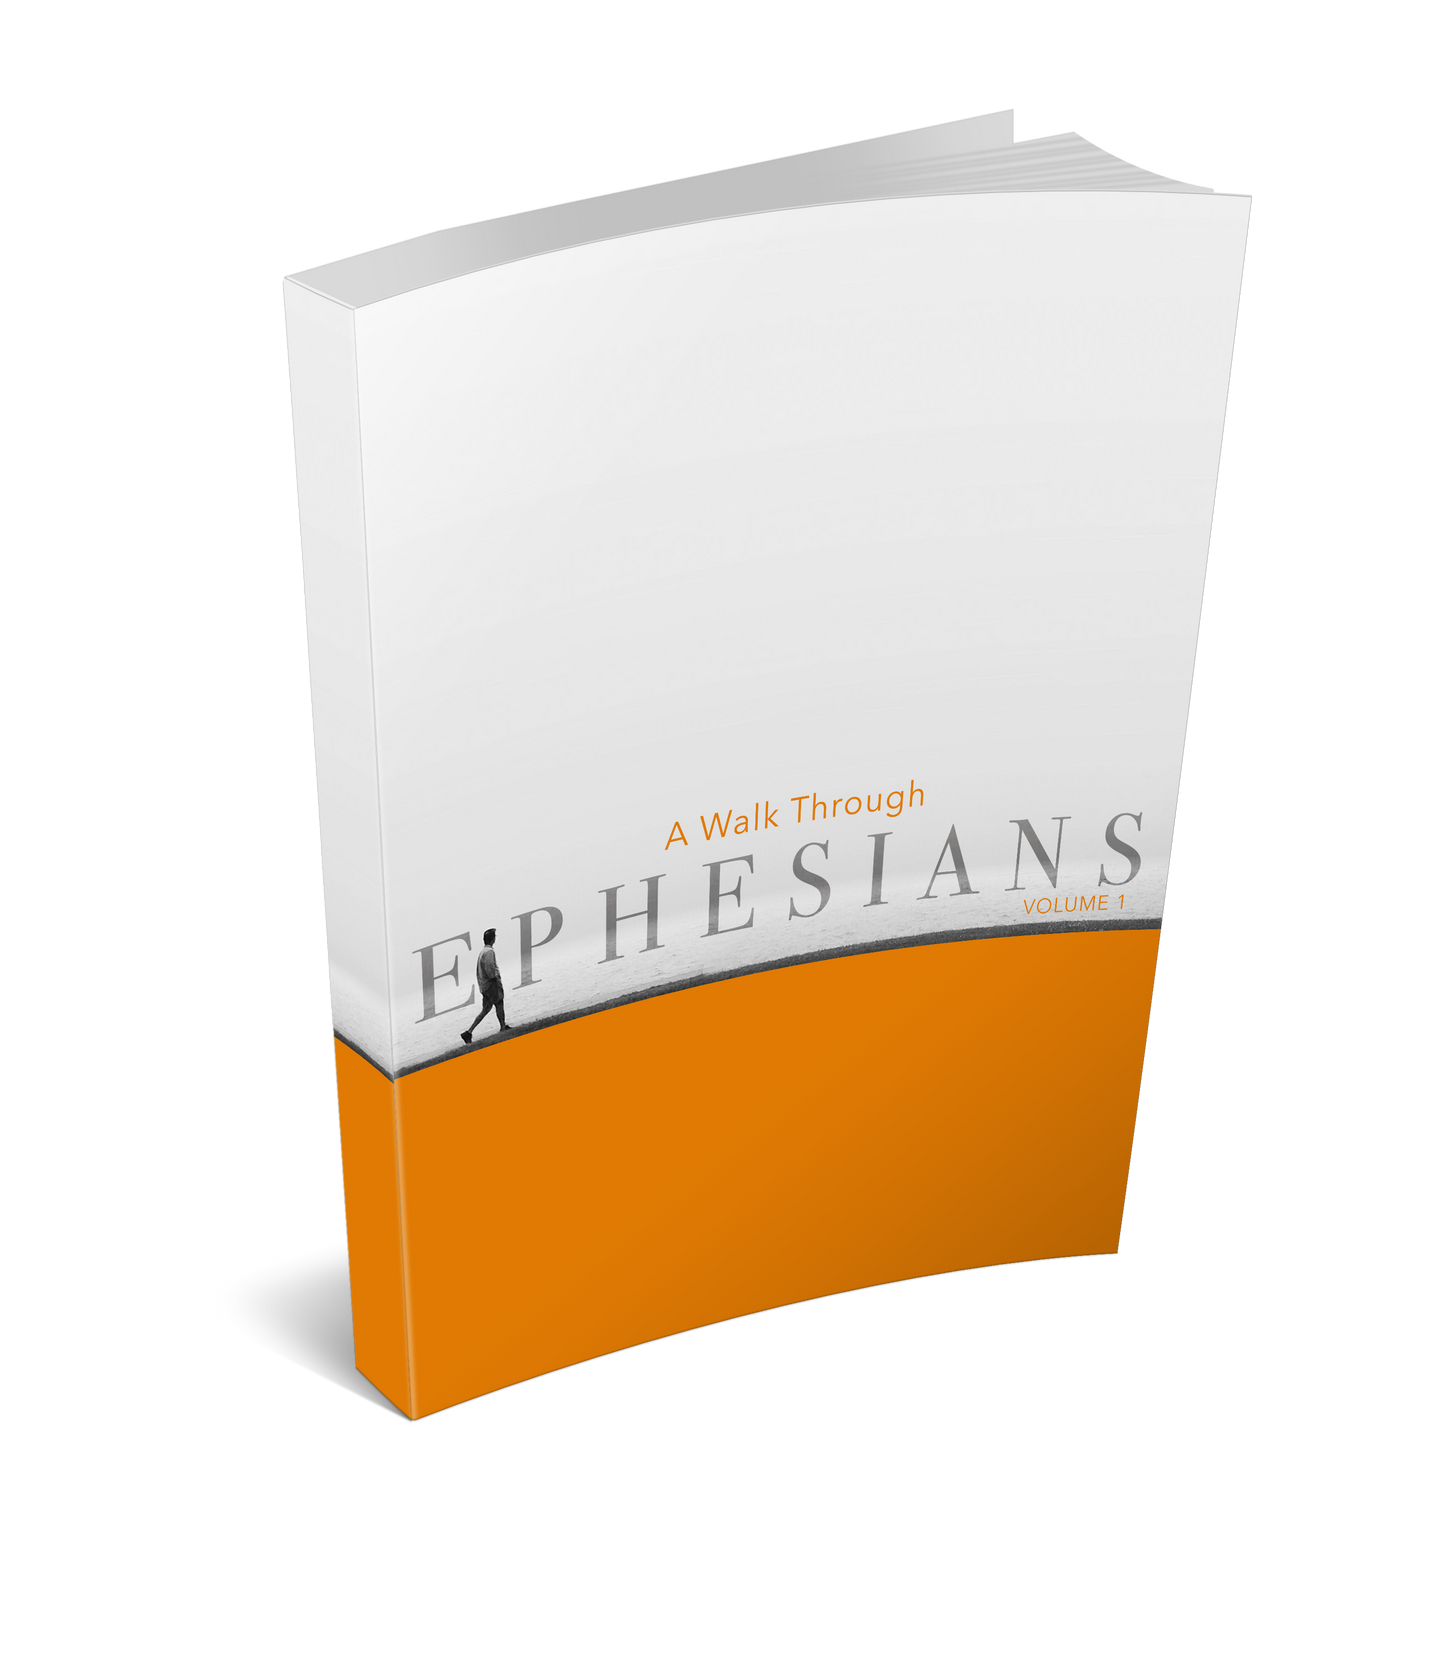 The 4 Volume Ephesians Commentary Set